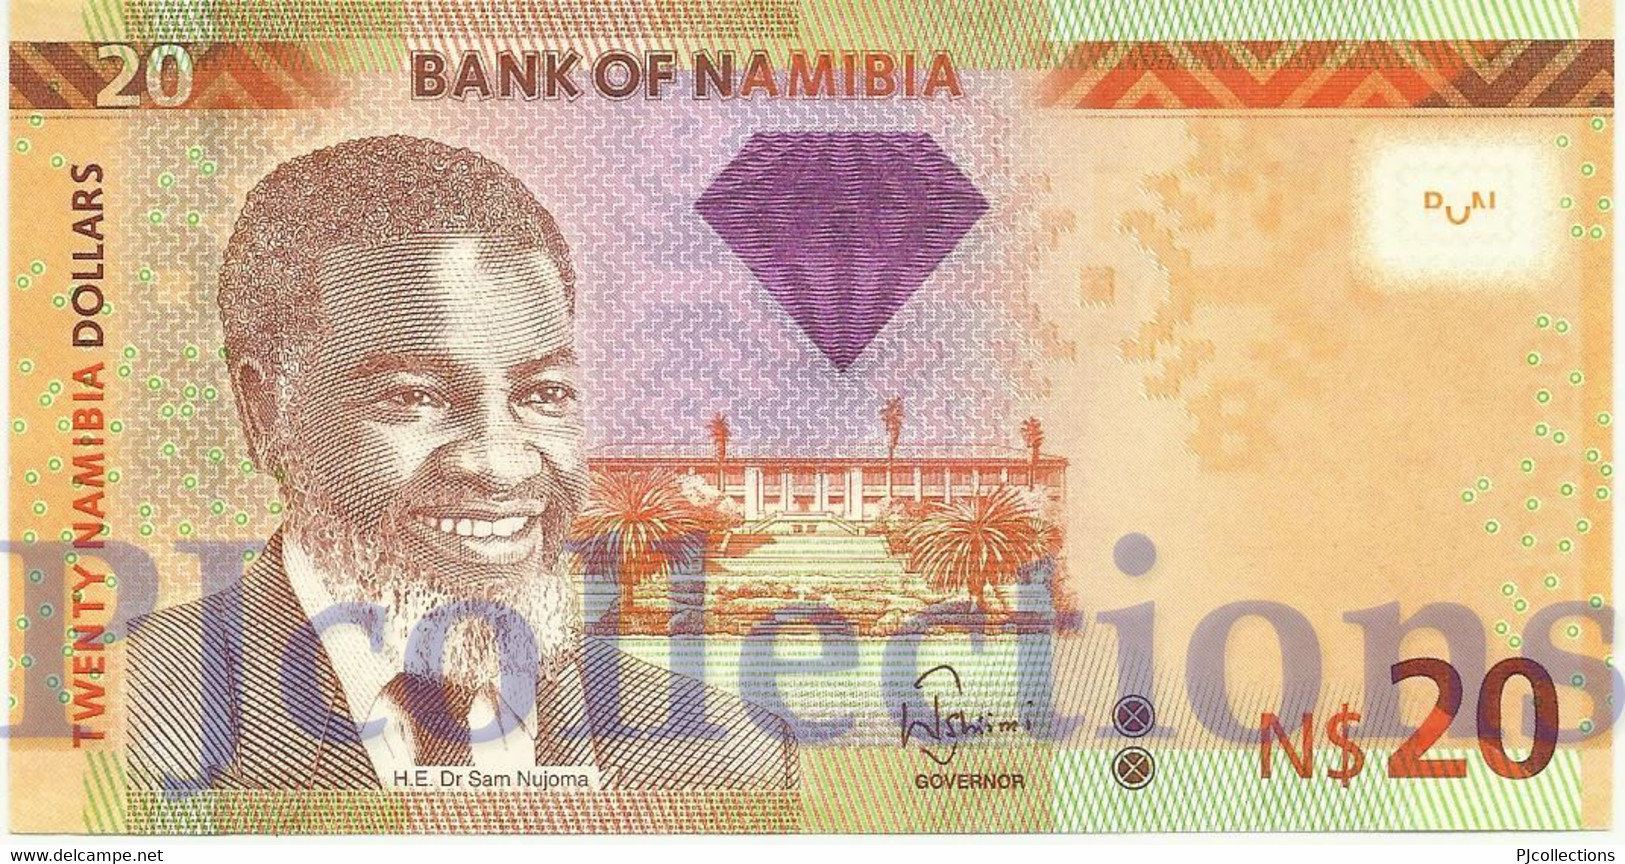 NAMIBIA 20 DOLLARS 2012 PICK 12a UNC - Namibie